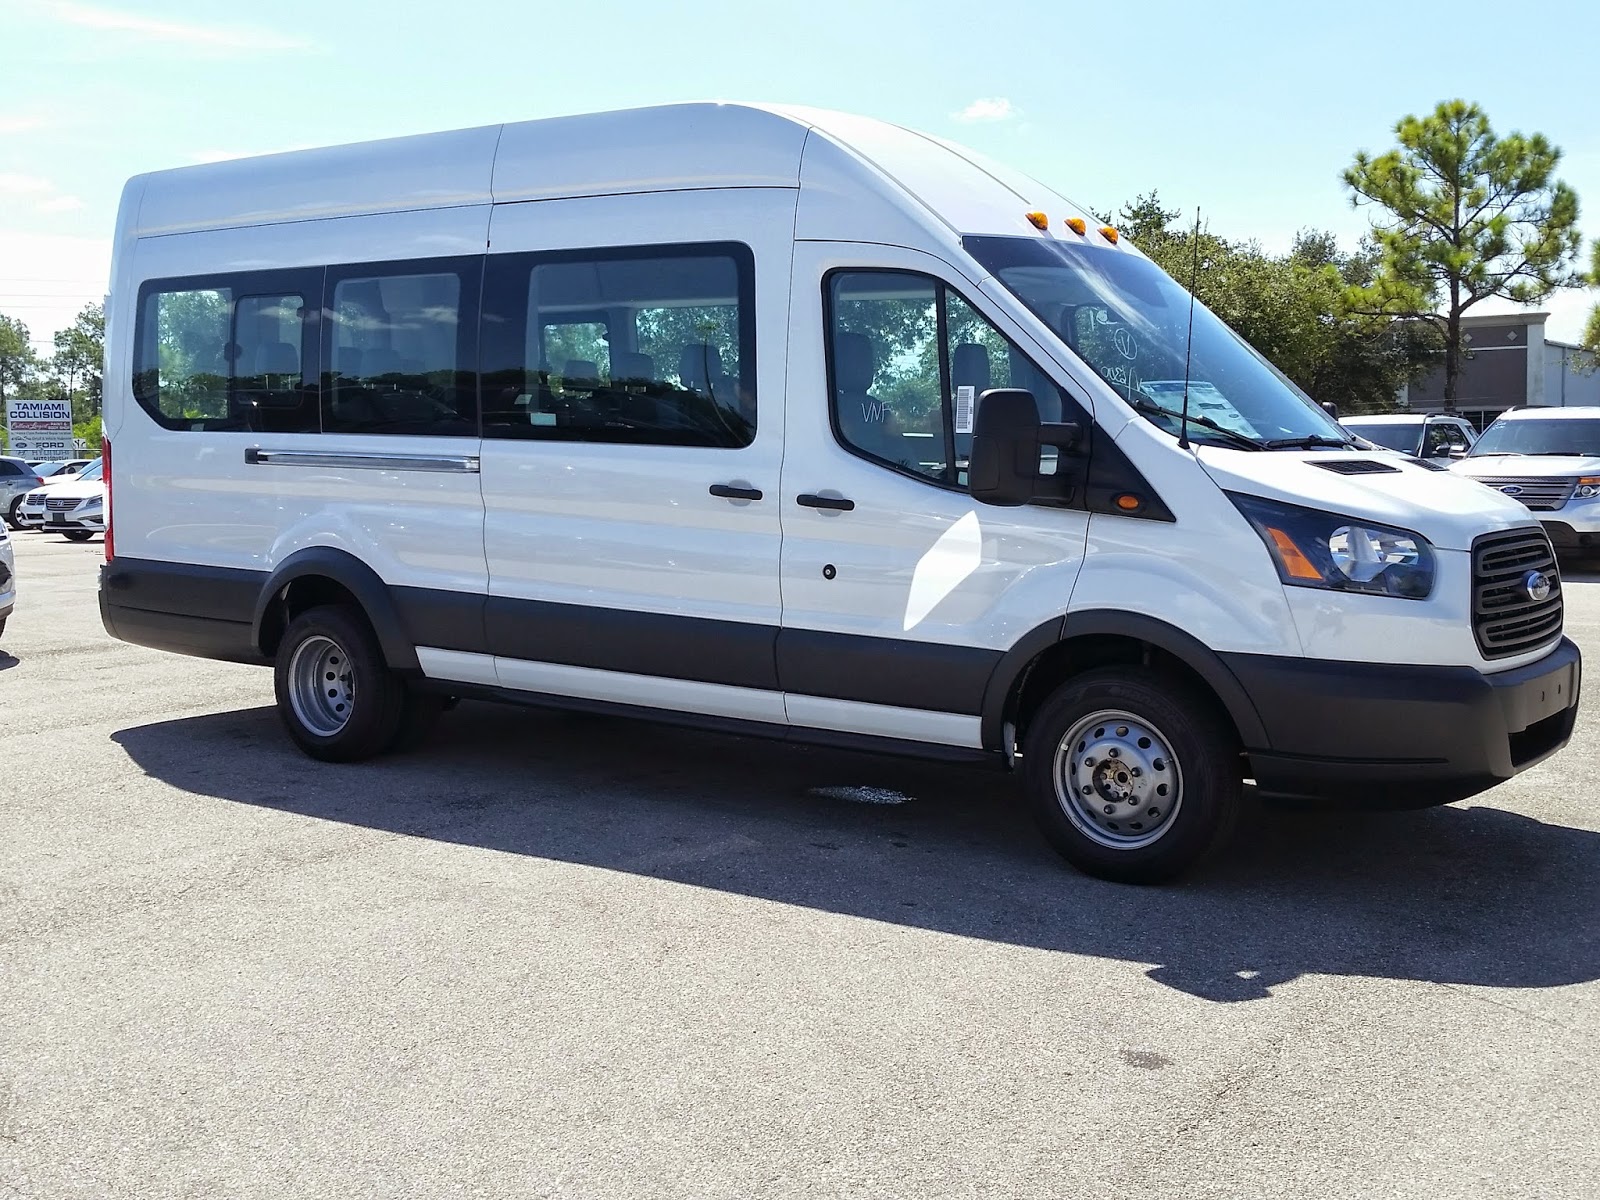 FORD TRUCKS & TRANSIT VANS in NAPLES FL: 15 Passenger Van is here Now